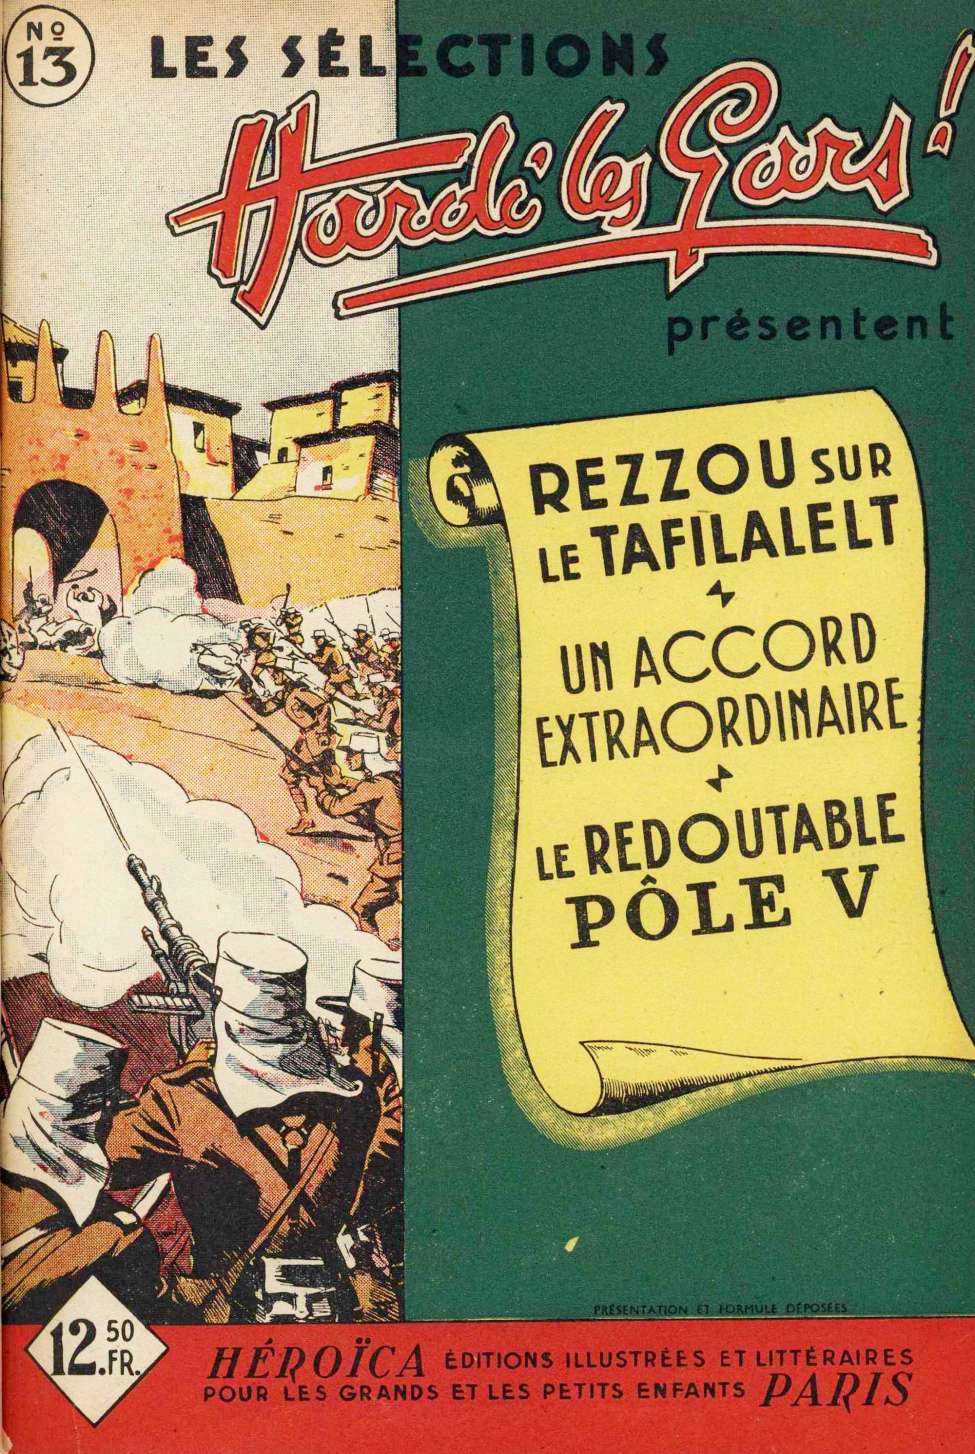 Book Cover For Hardi les Gars 13 - Rezzou sur le Tafilalelt